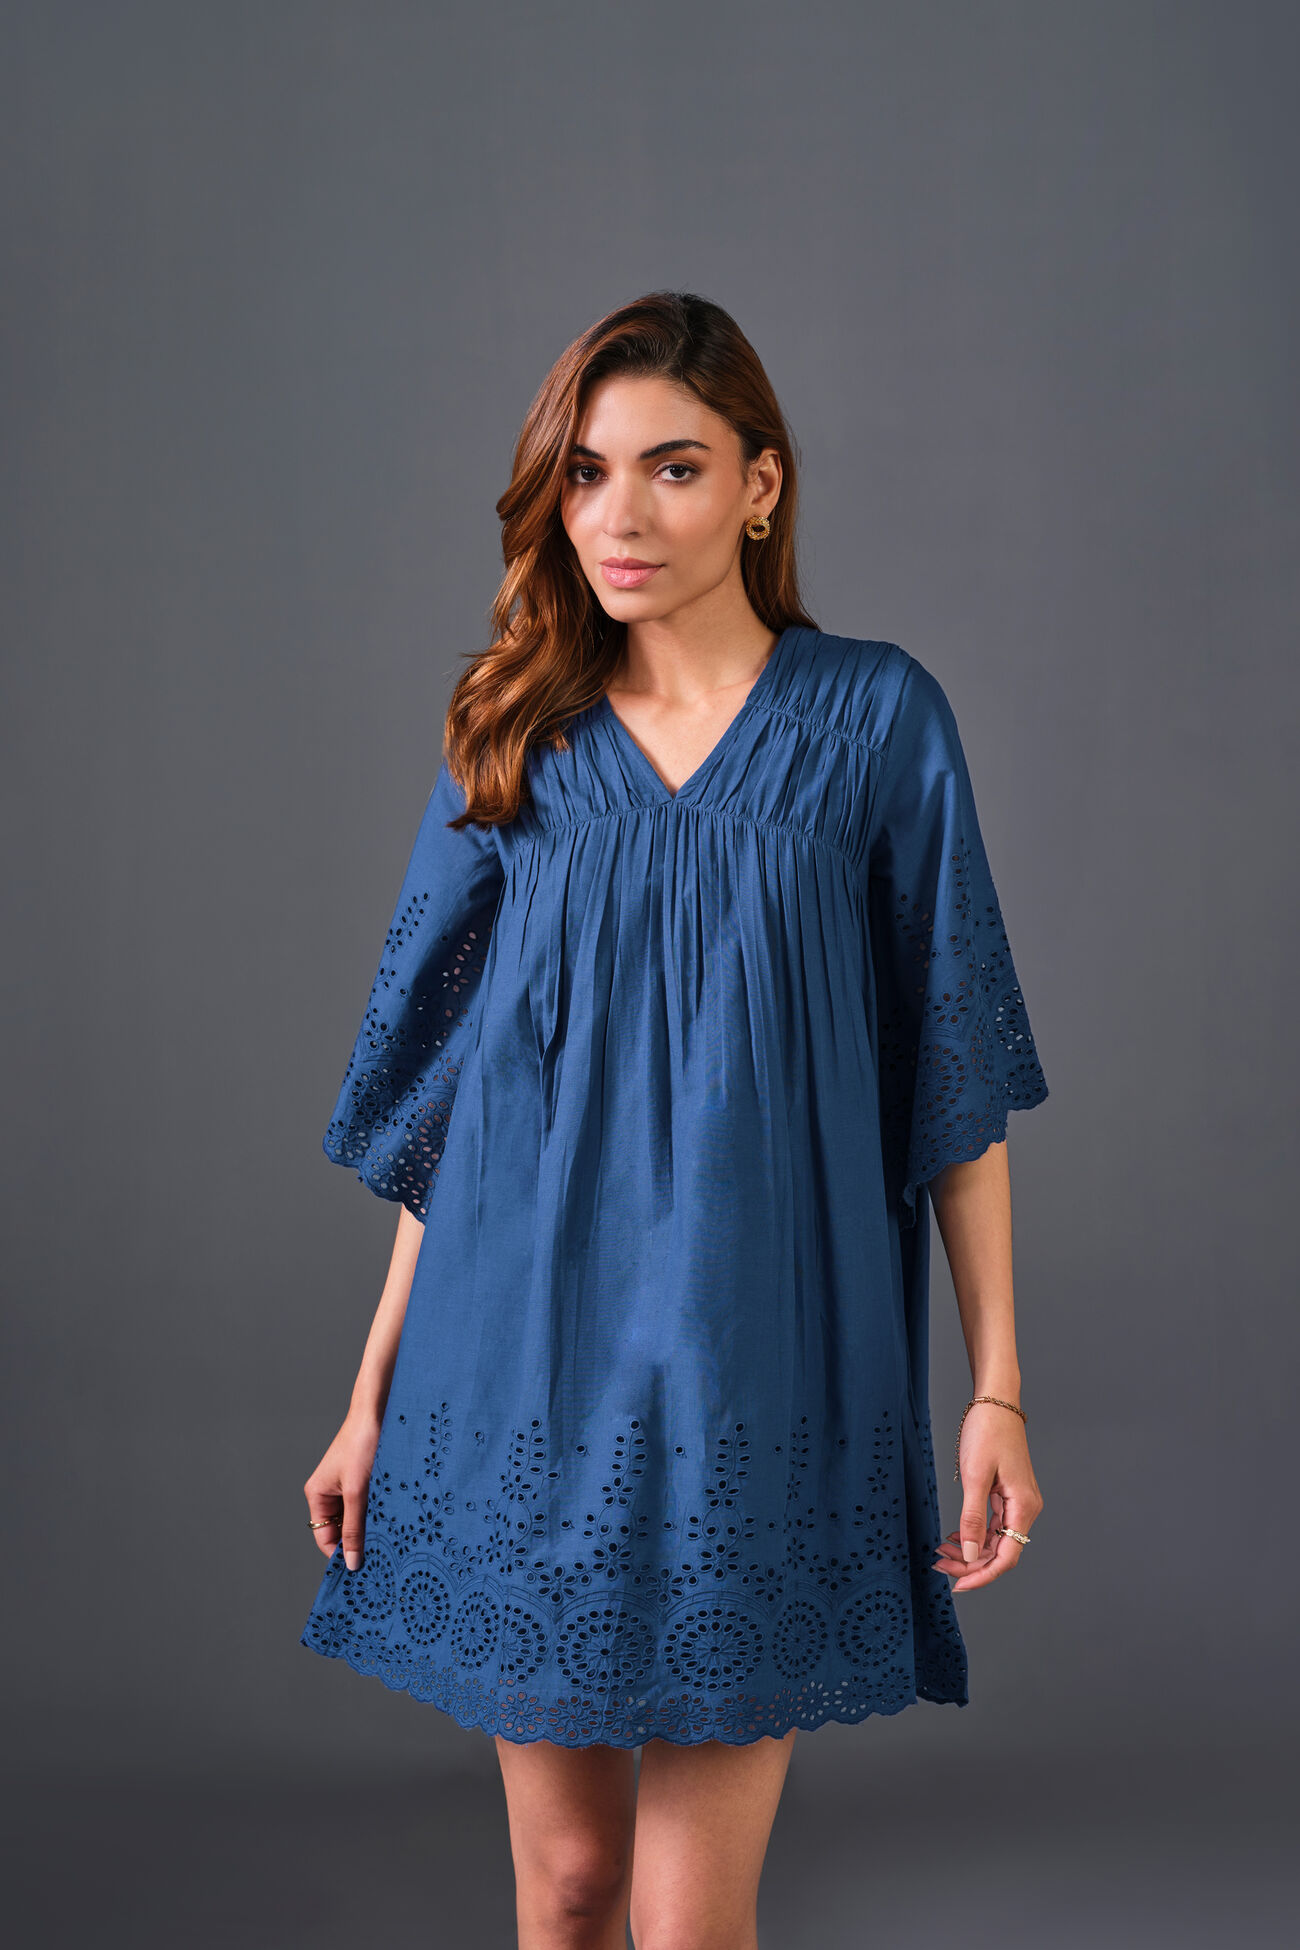 Breezy Fling Cotton Dress, Navy Blue, image 2